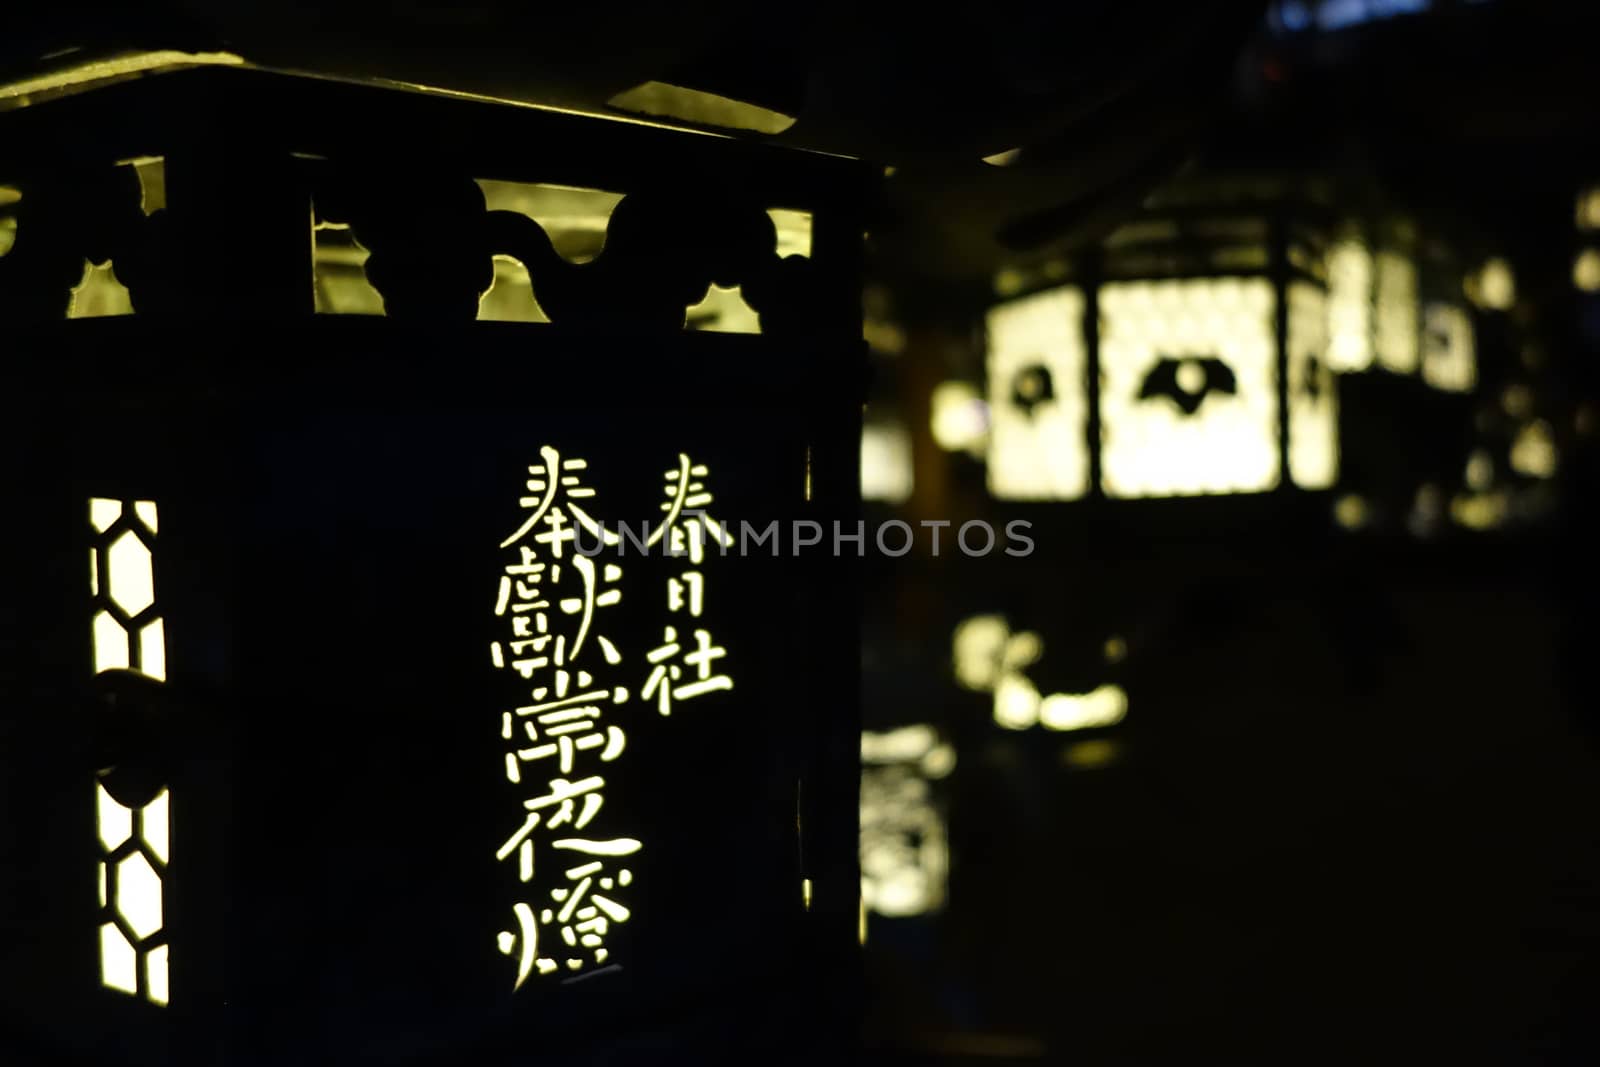 Lanterns lighting in the dark, Kasuga-Taisha Shrine, Nara, Japan by daboost